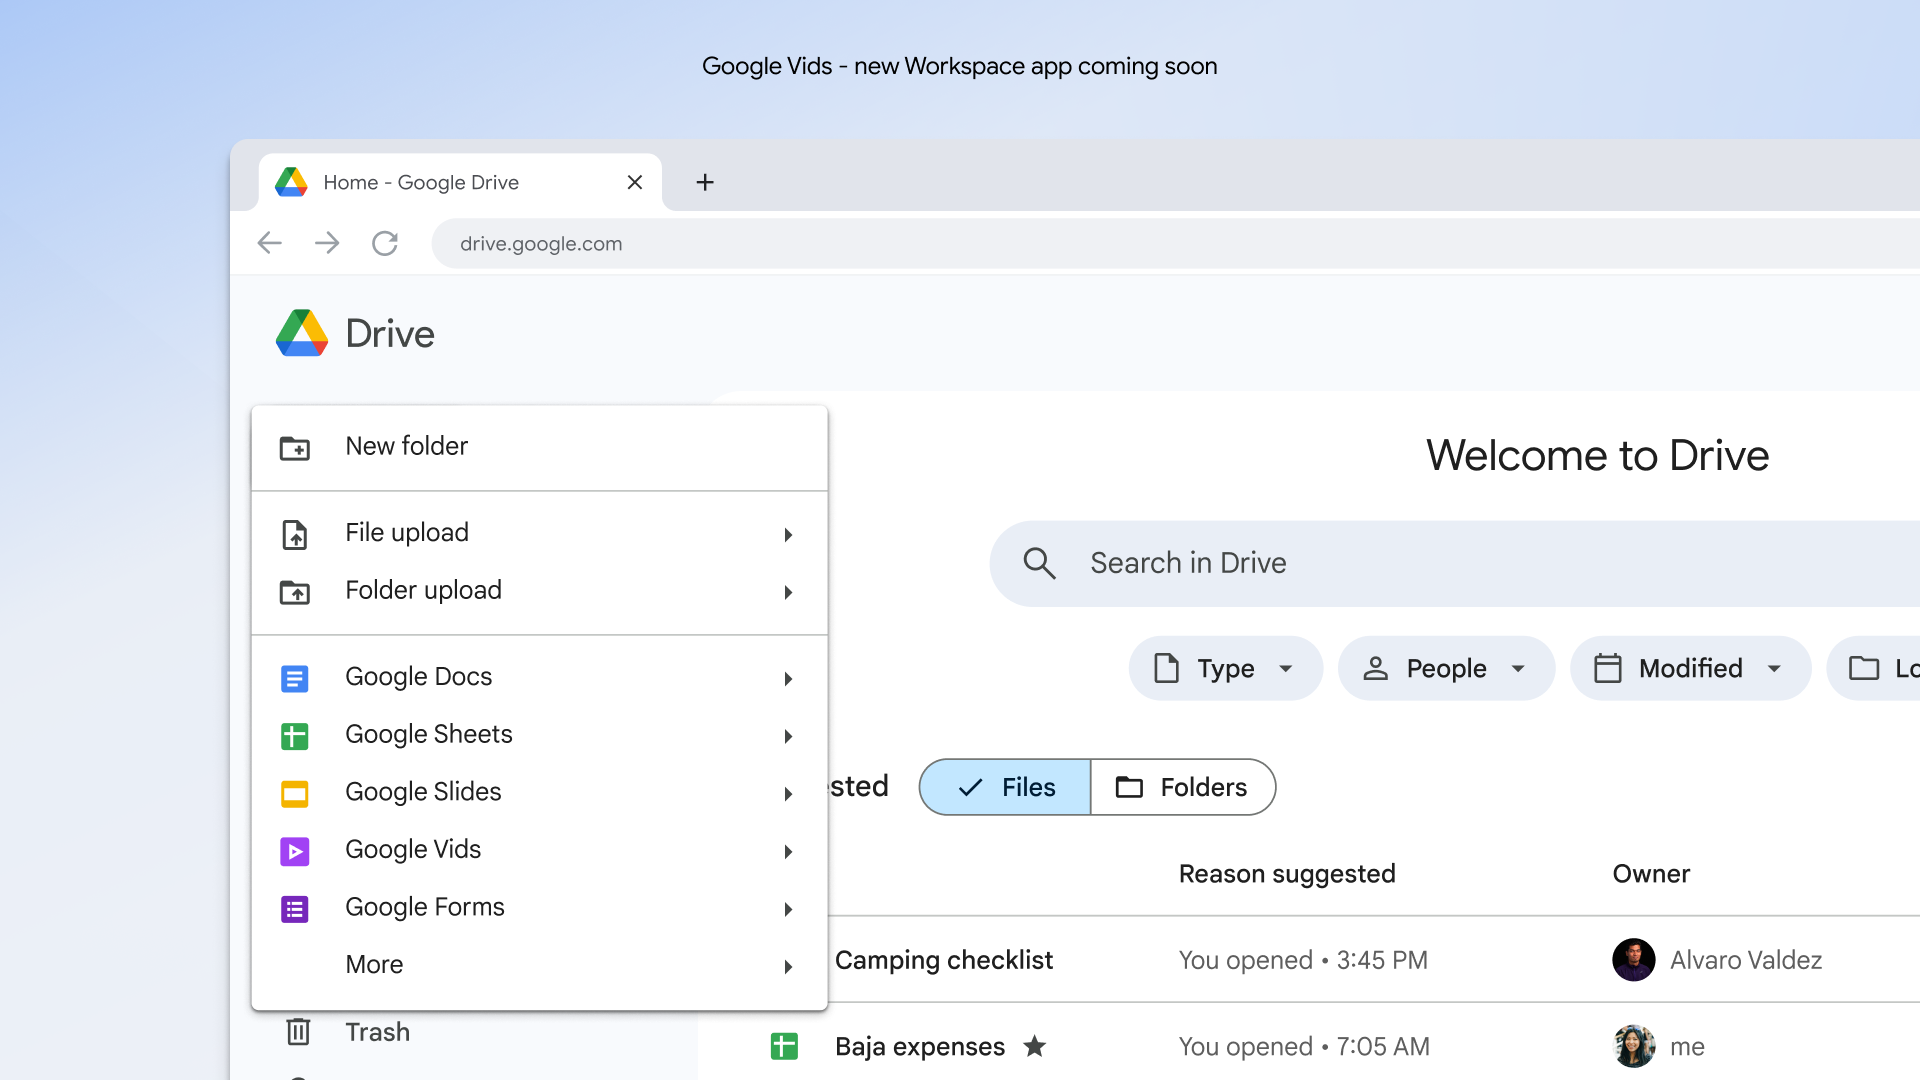 Google Vids Drive menu